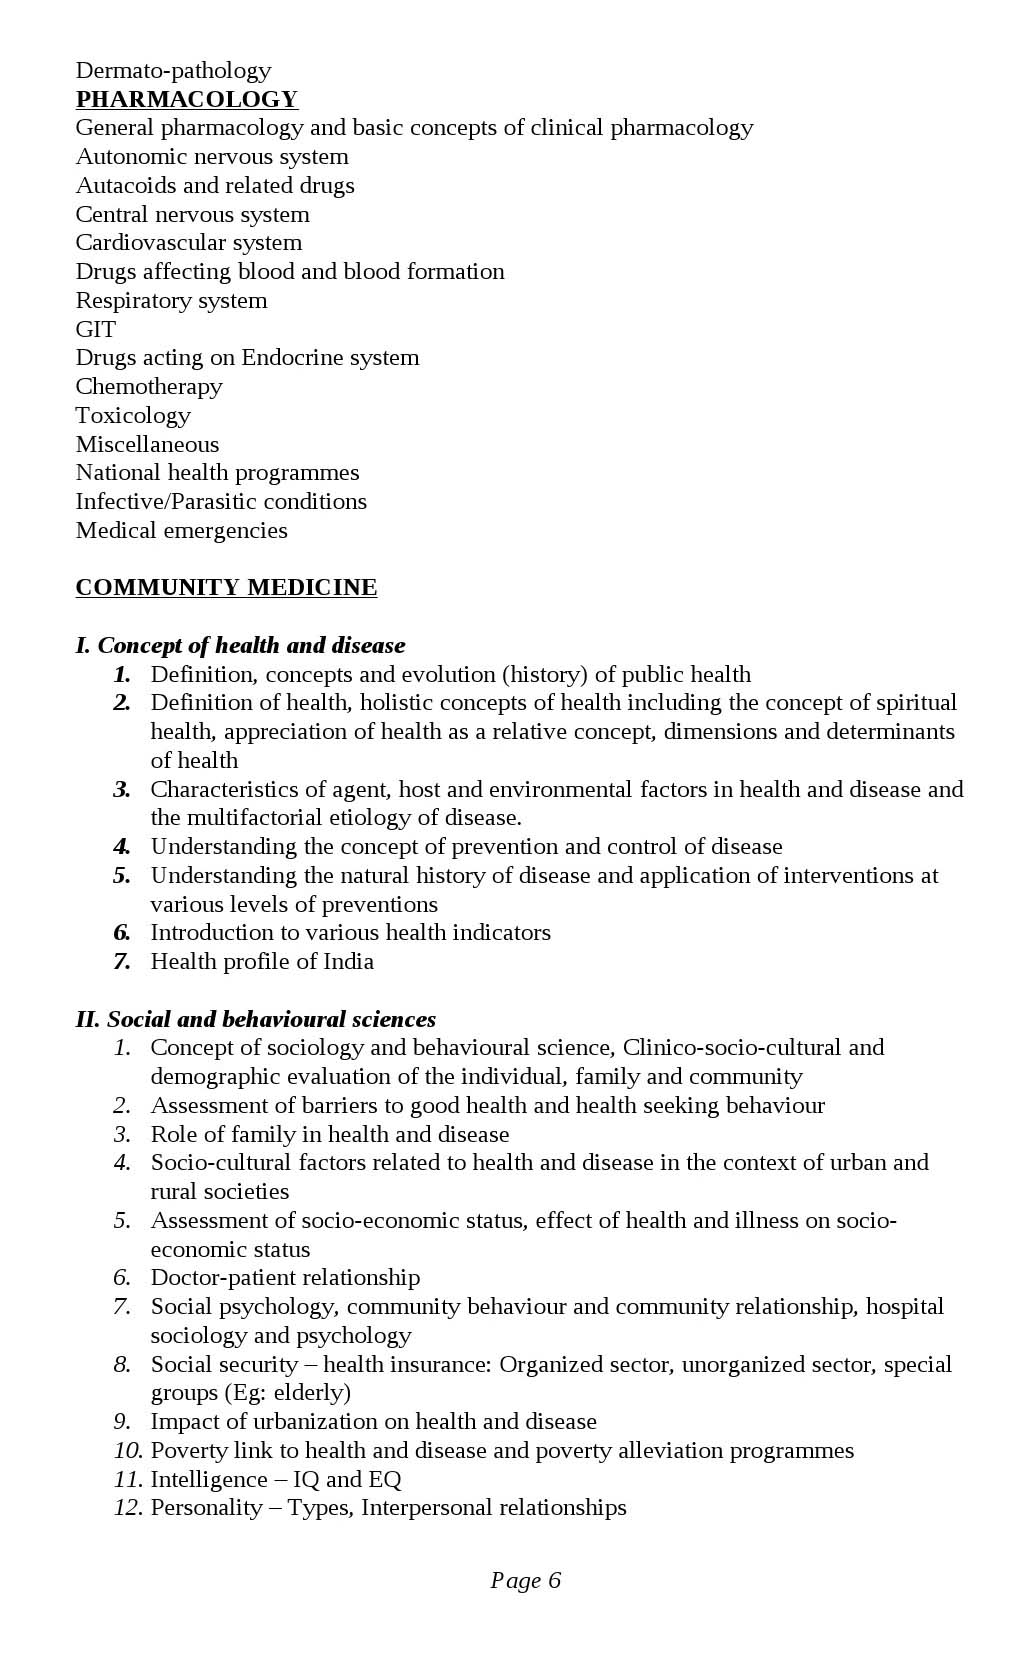 Kerala PSC Assistant Surgeon Exam Syllabus May 2020 - Notification Image 6